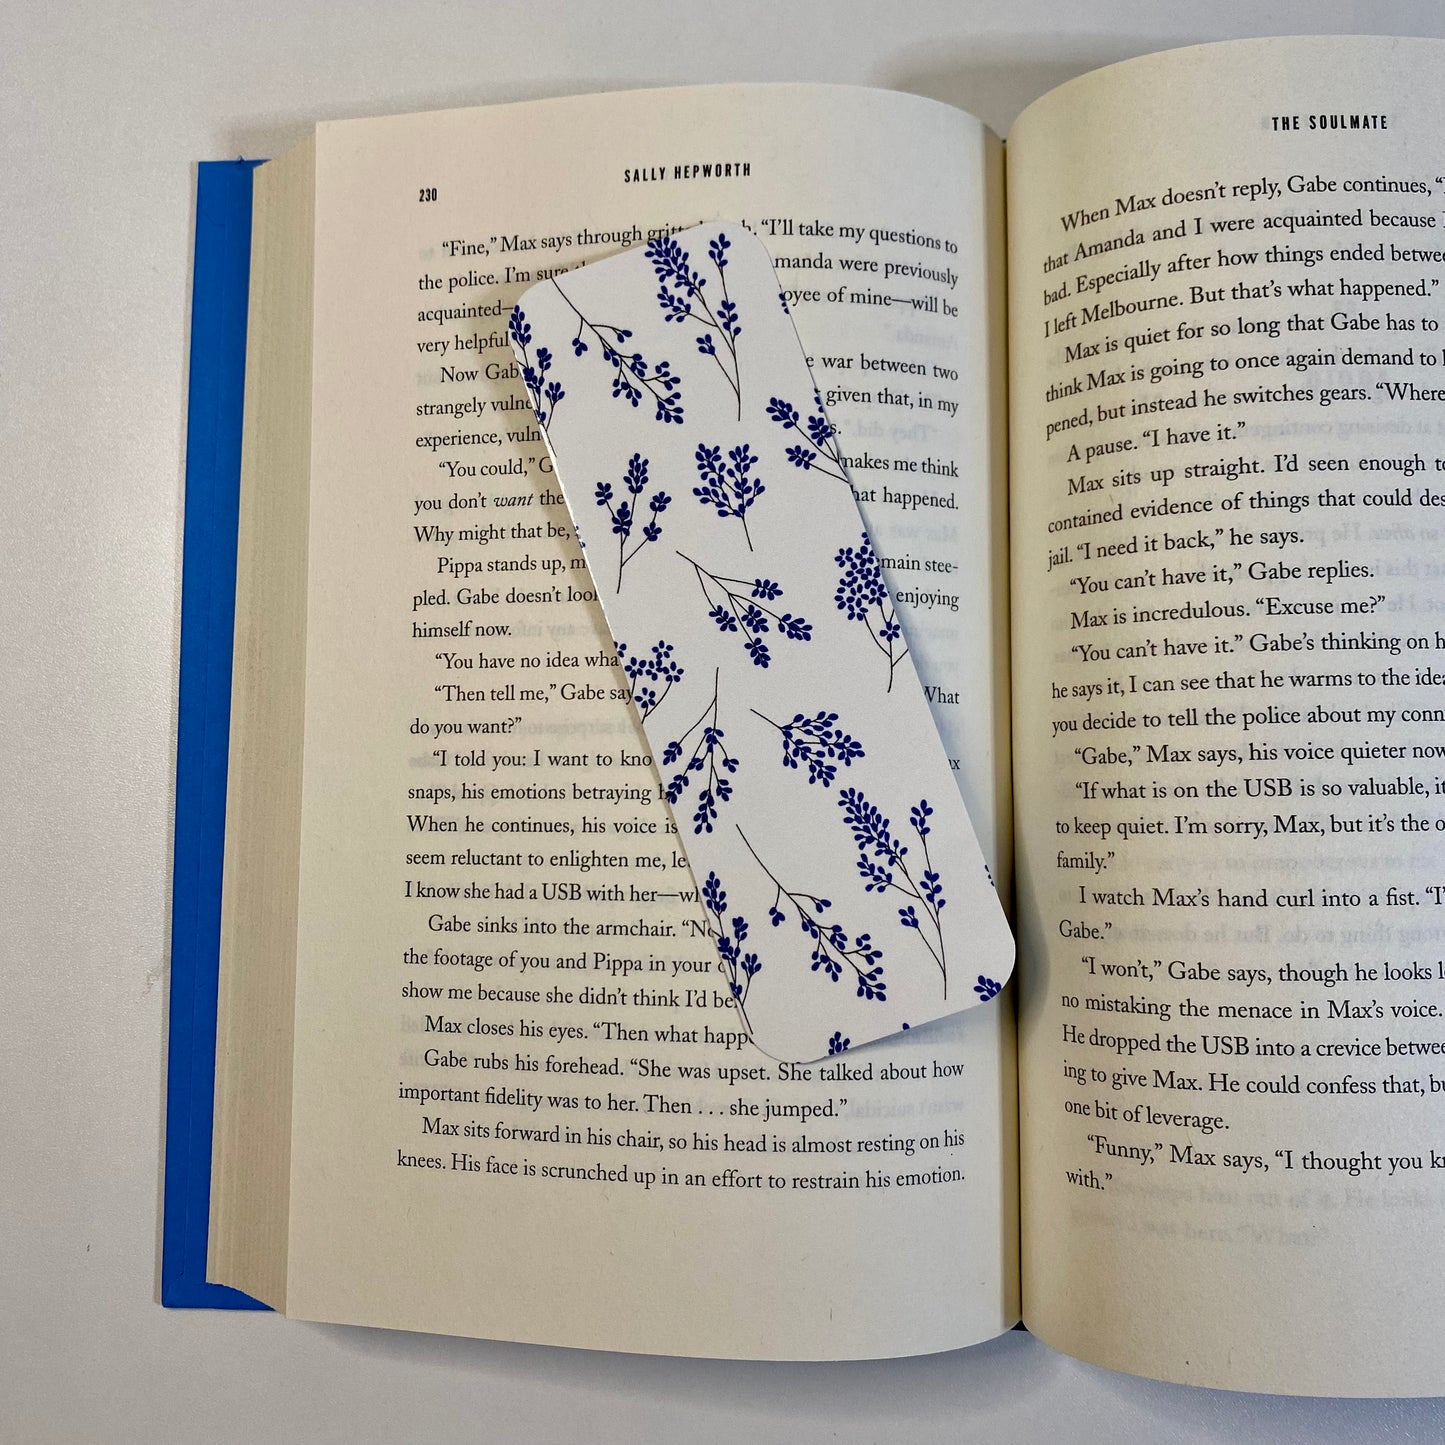 Blue Flower Bookmark